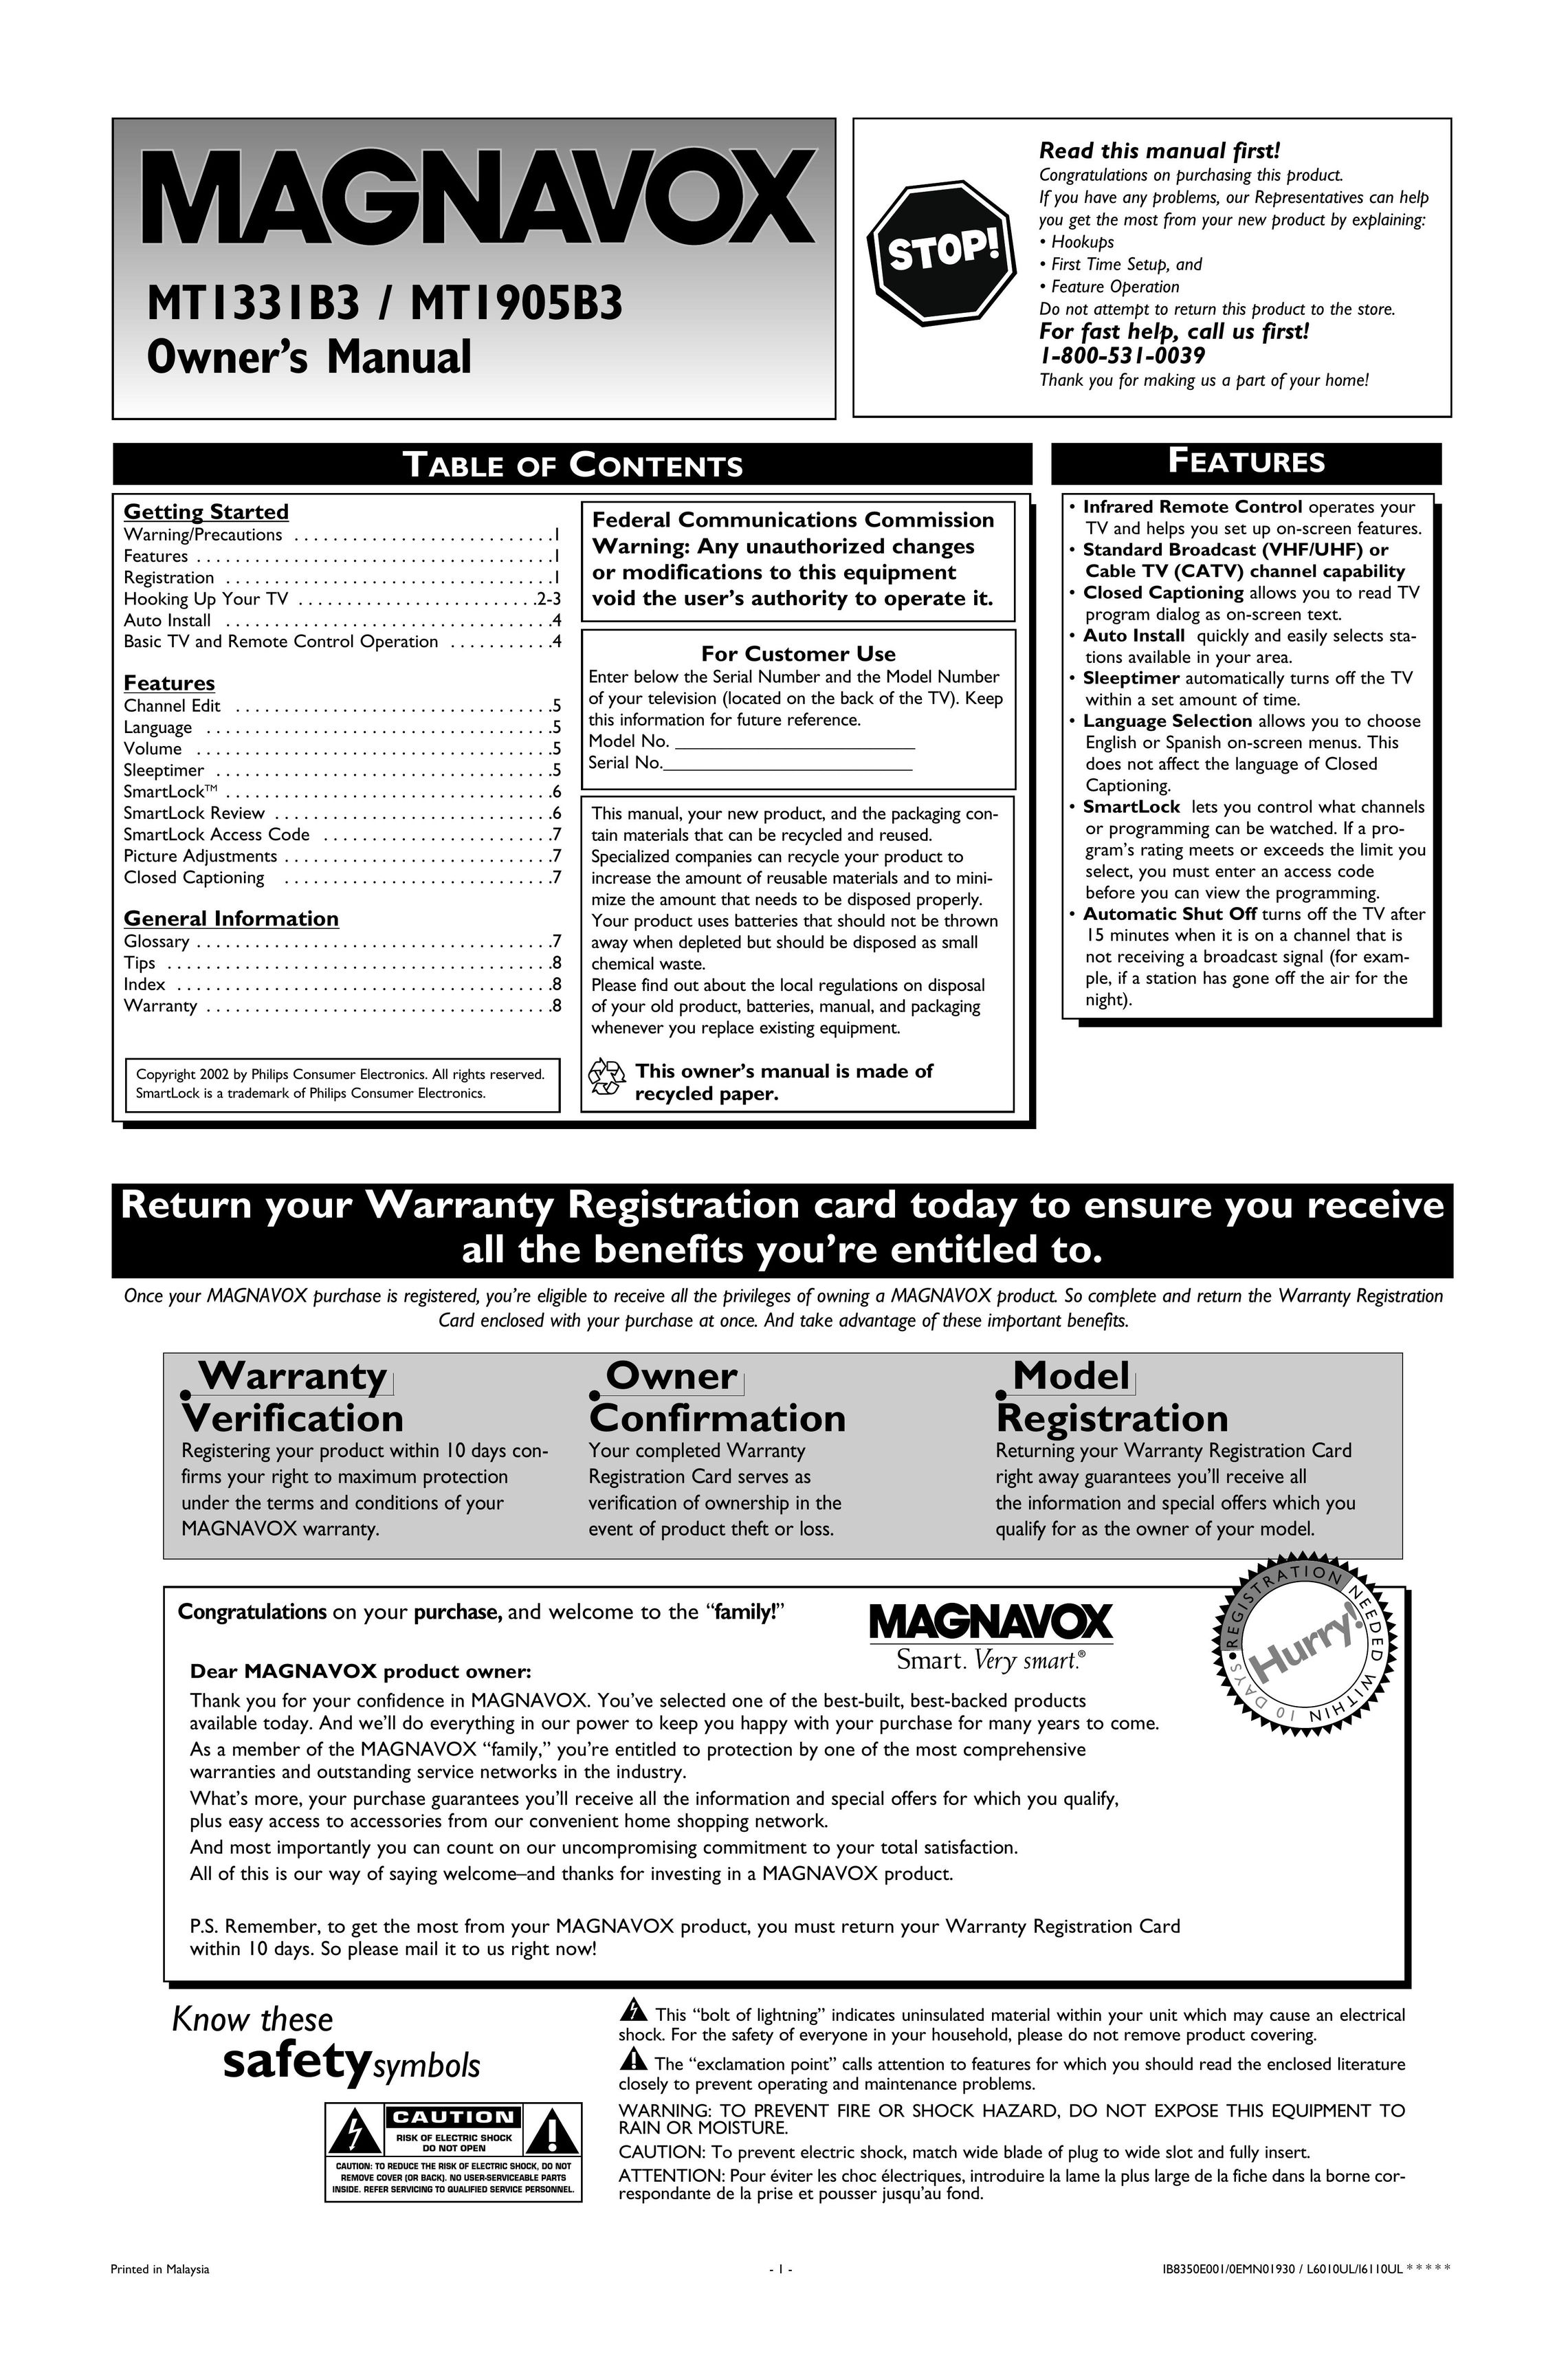 Magnavox MT1905B3 CRT Television User Manual